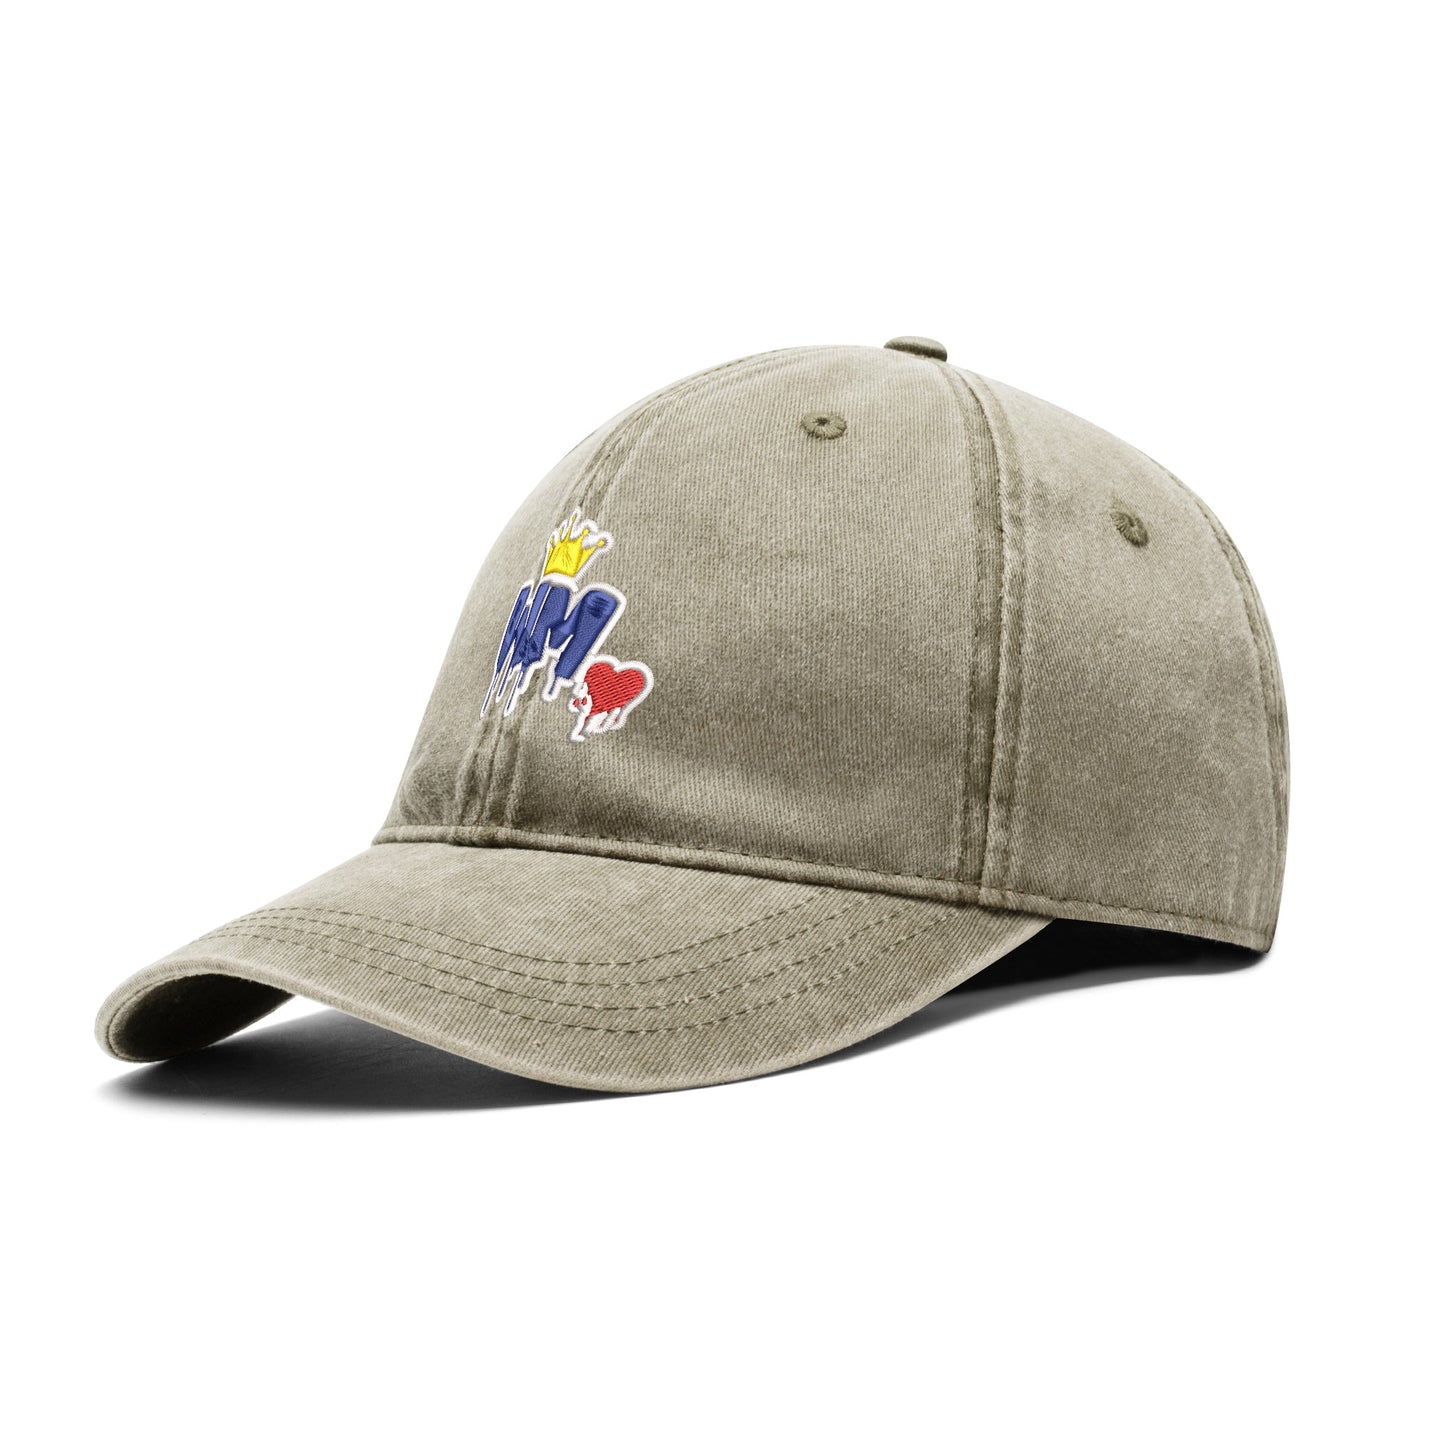 WMs "White Logo" Embroidered Denim Baseball Cap